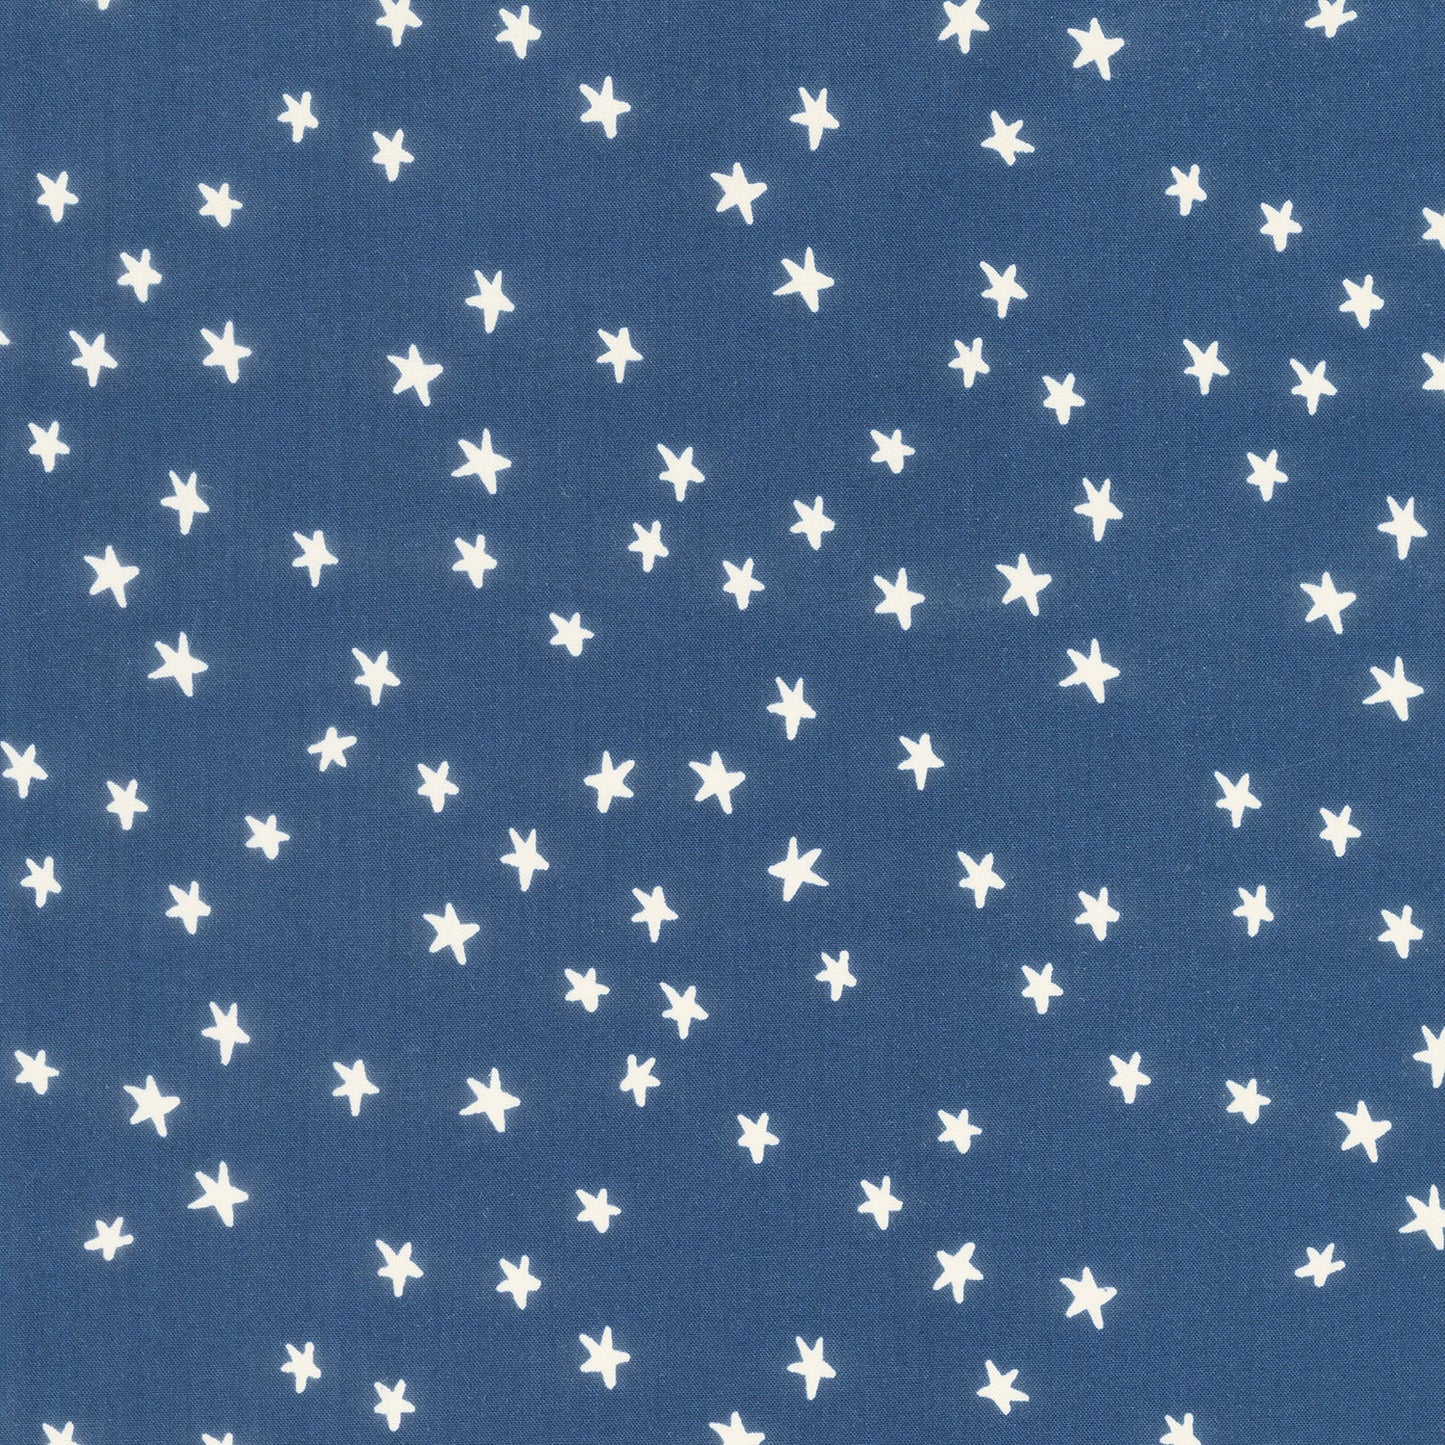 Starry - Stars Bluebell Yardage Primary Image